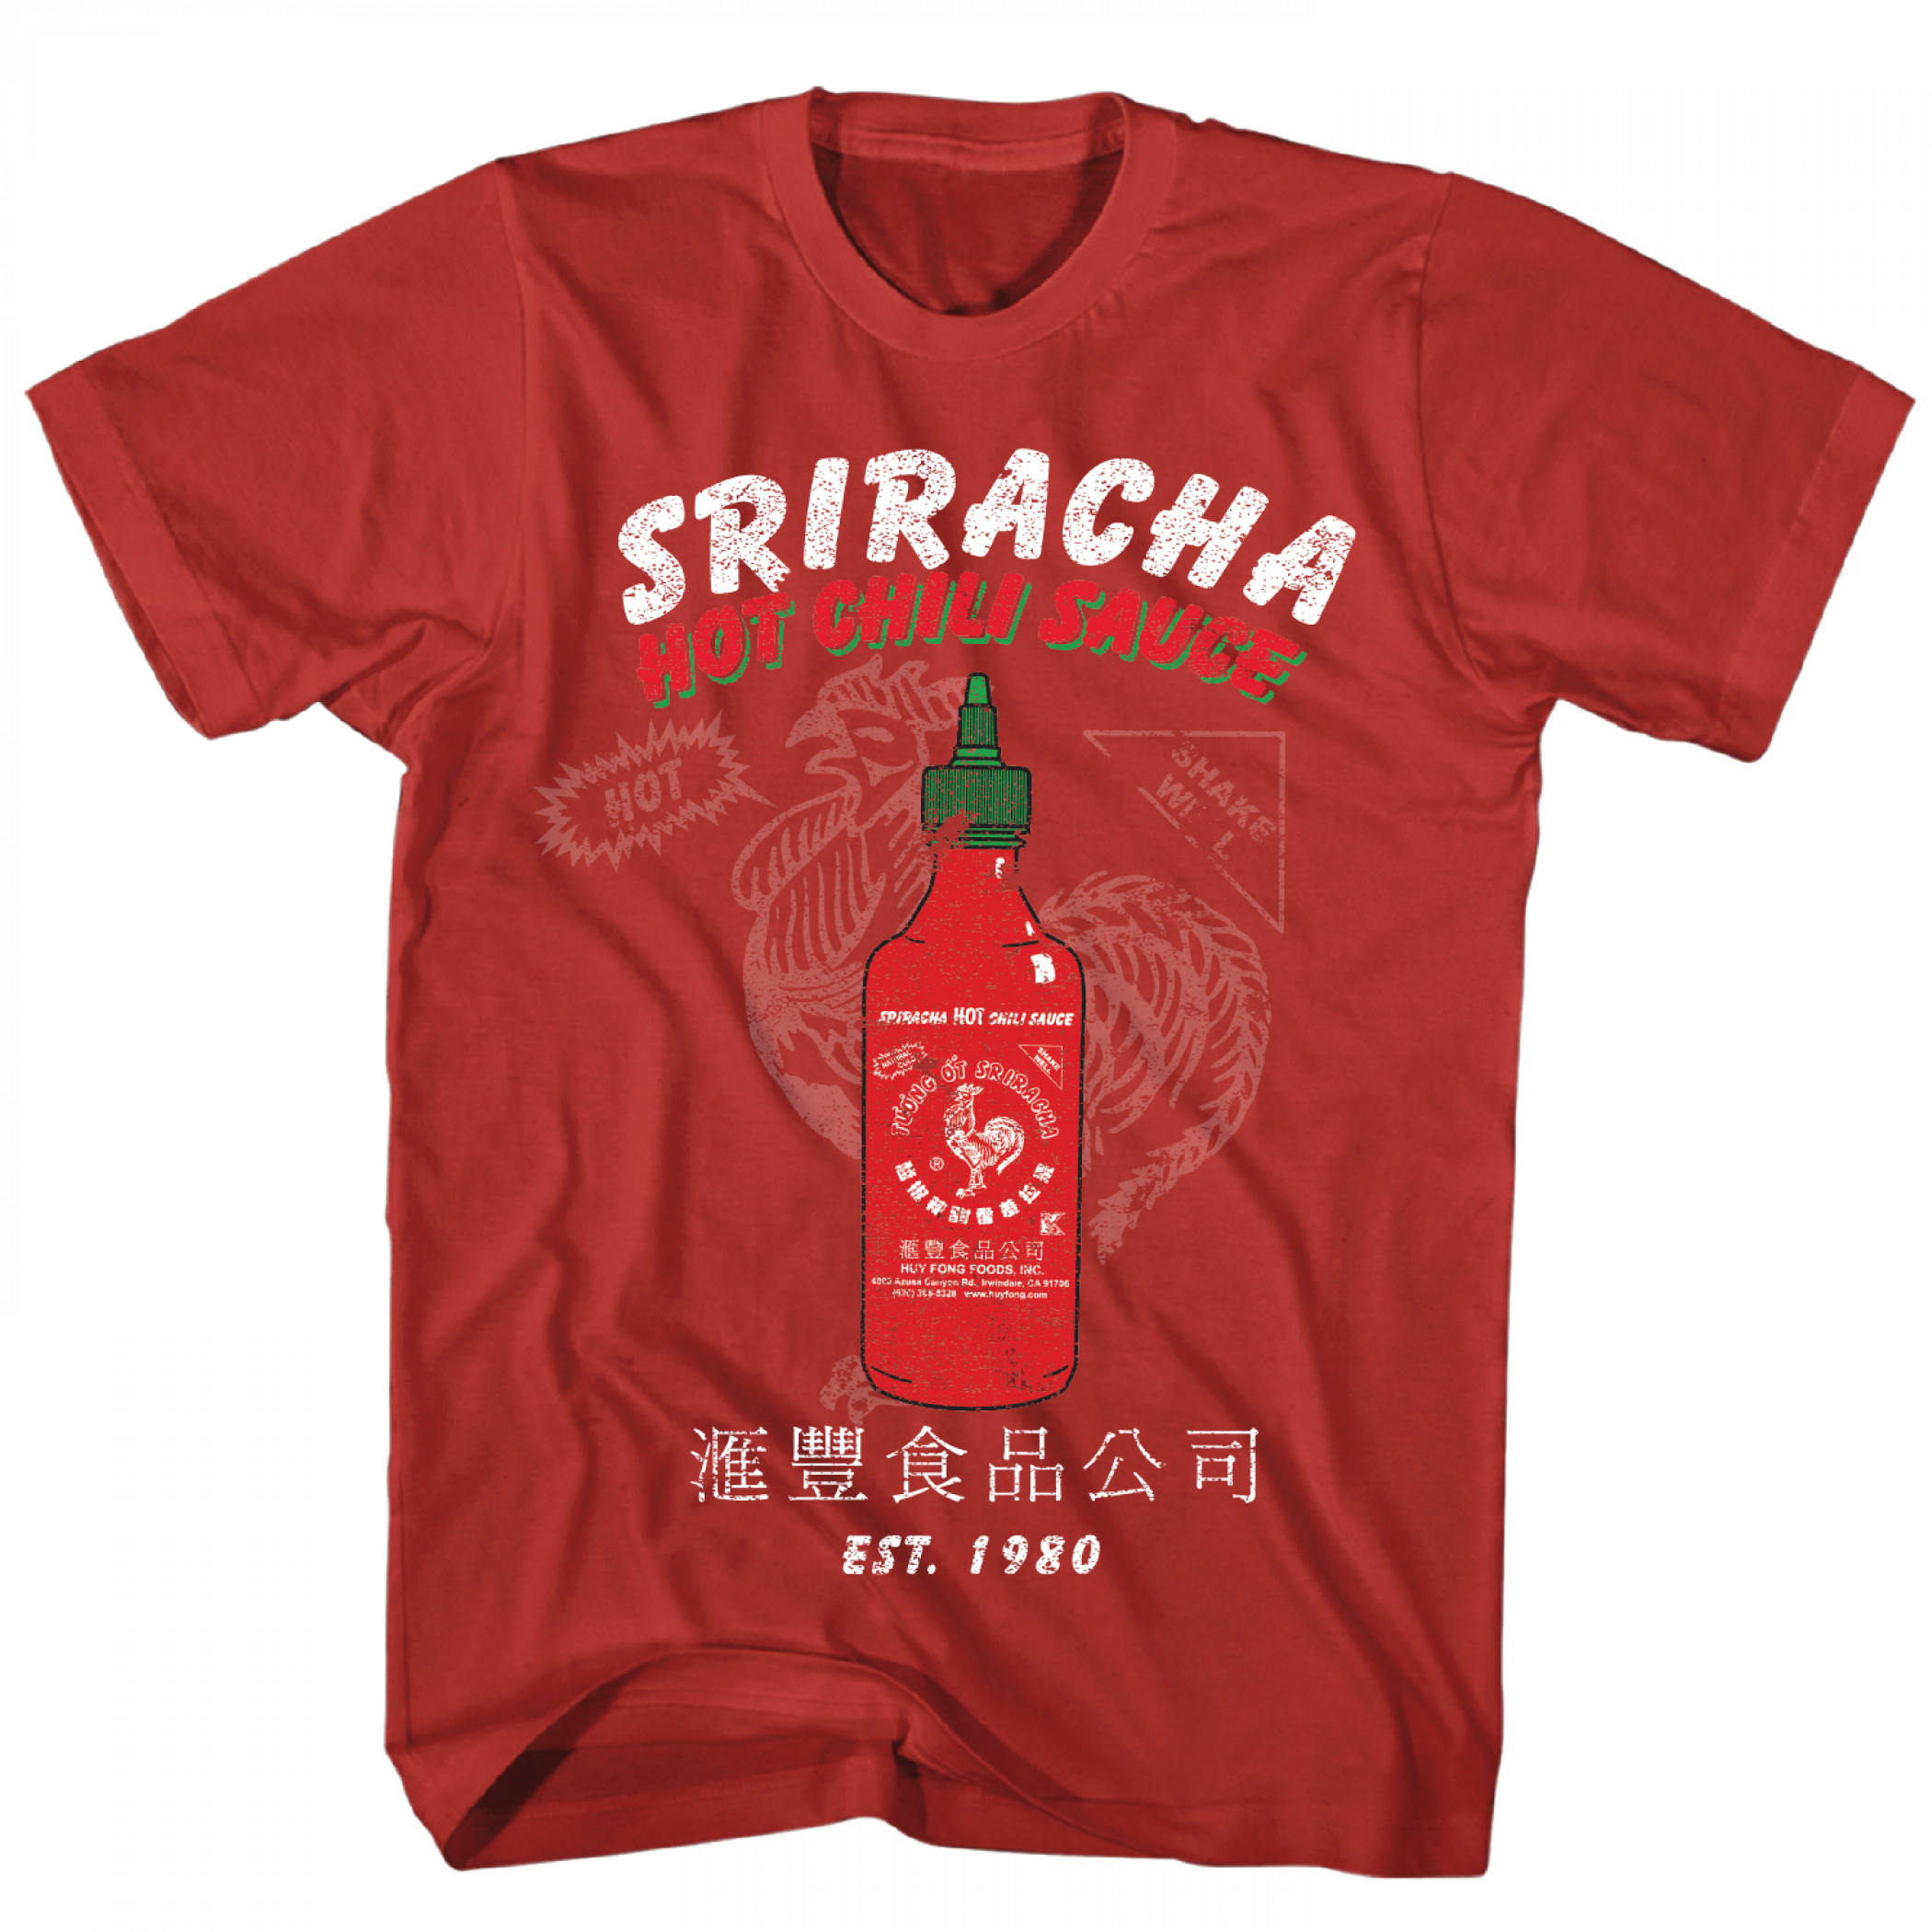 Sriracha Bottle and Vintage Logo T-Shirt